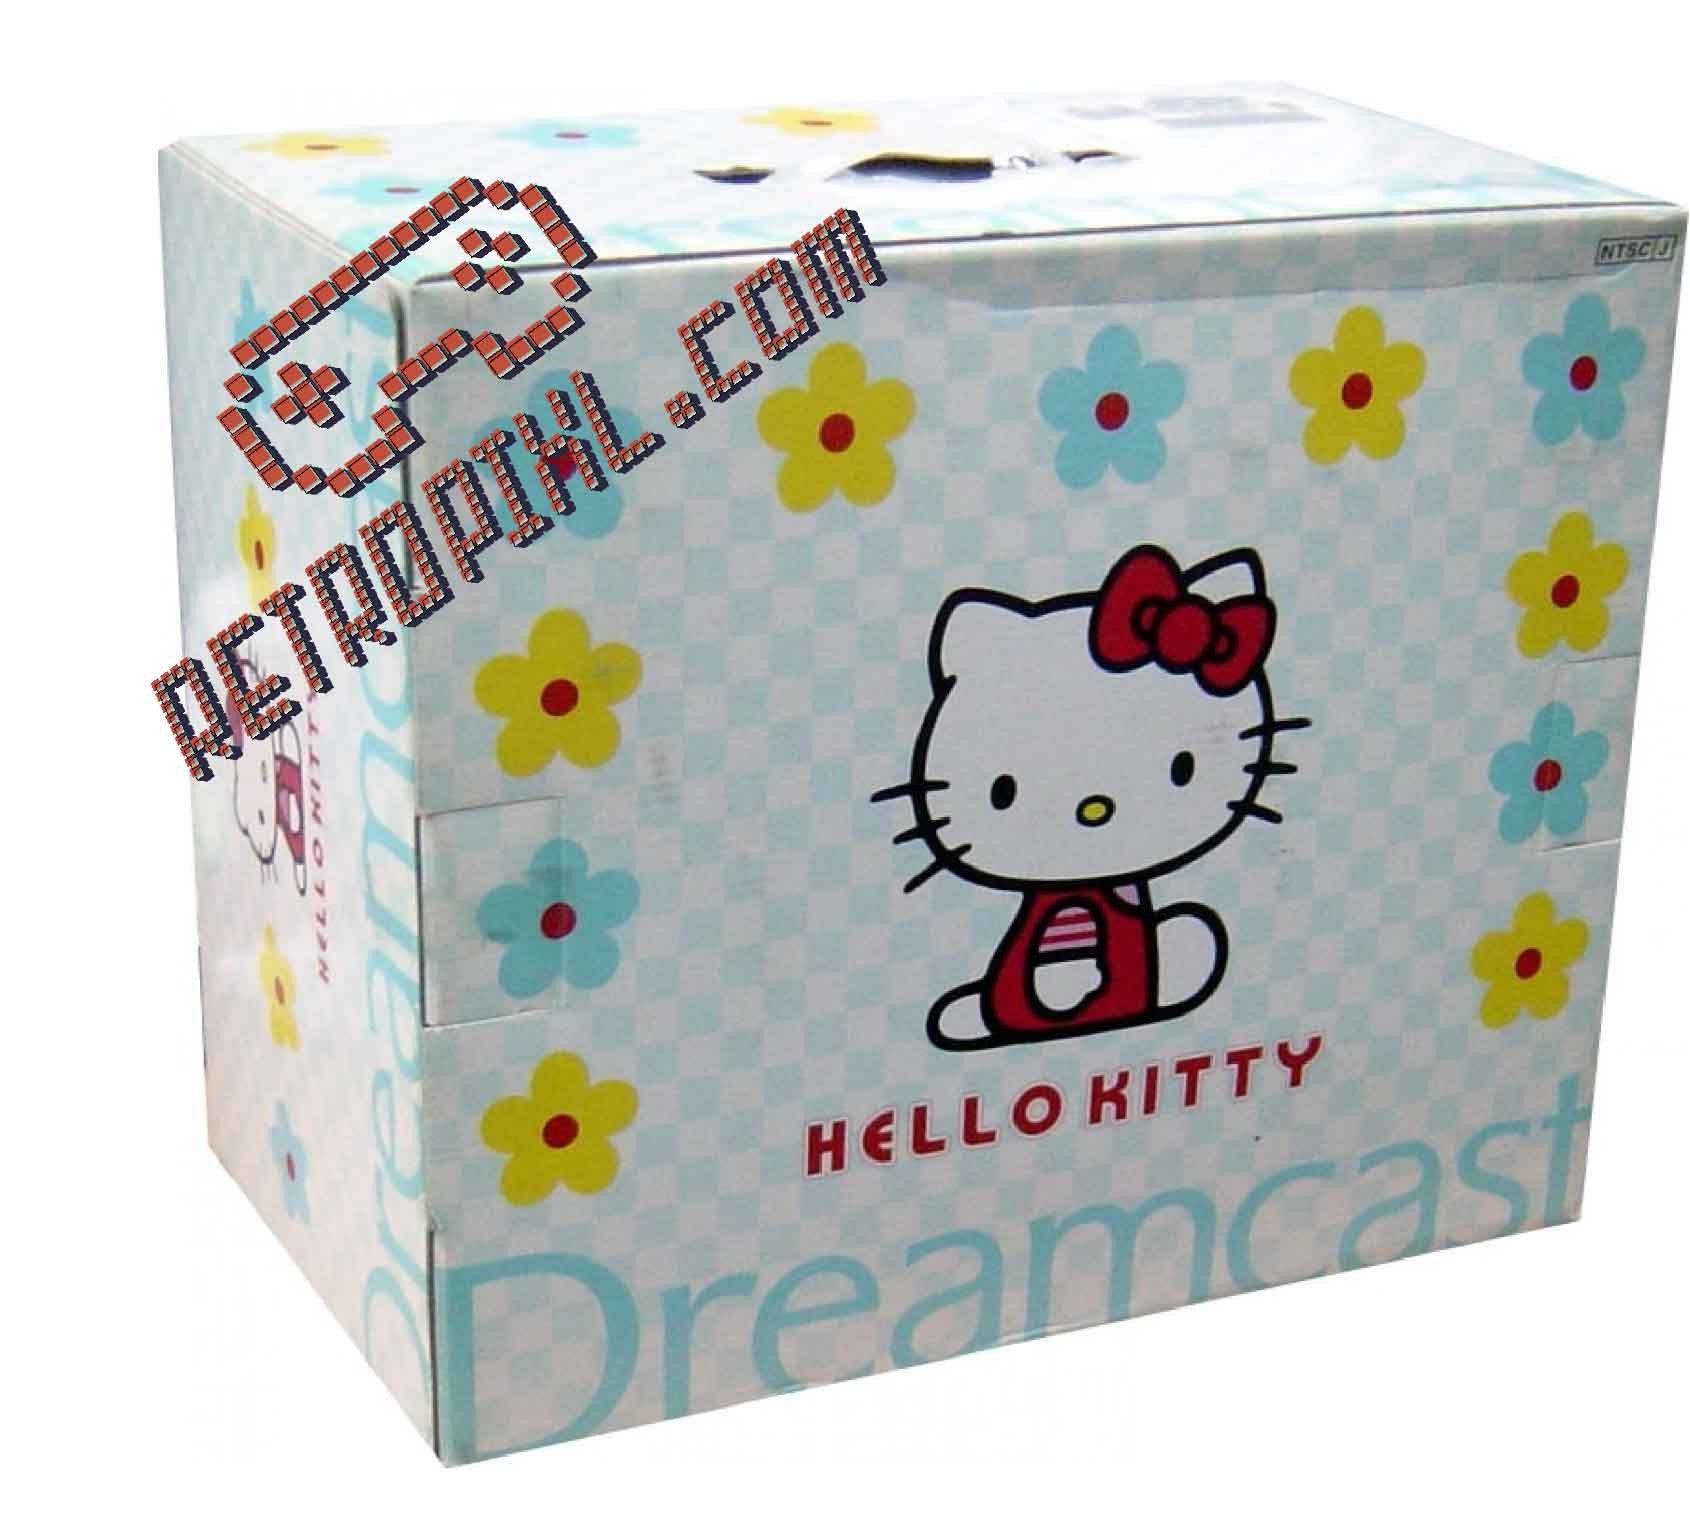 Sega Dreamcast Hello Kitty LIMITED EDITION